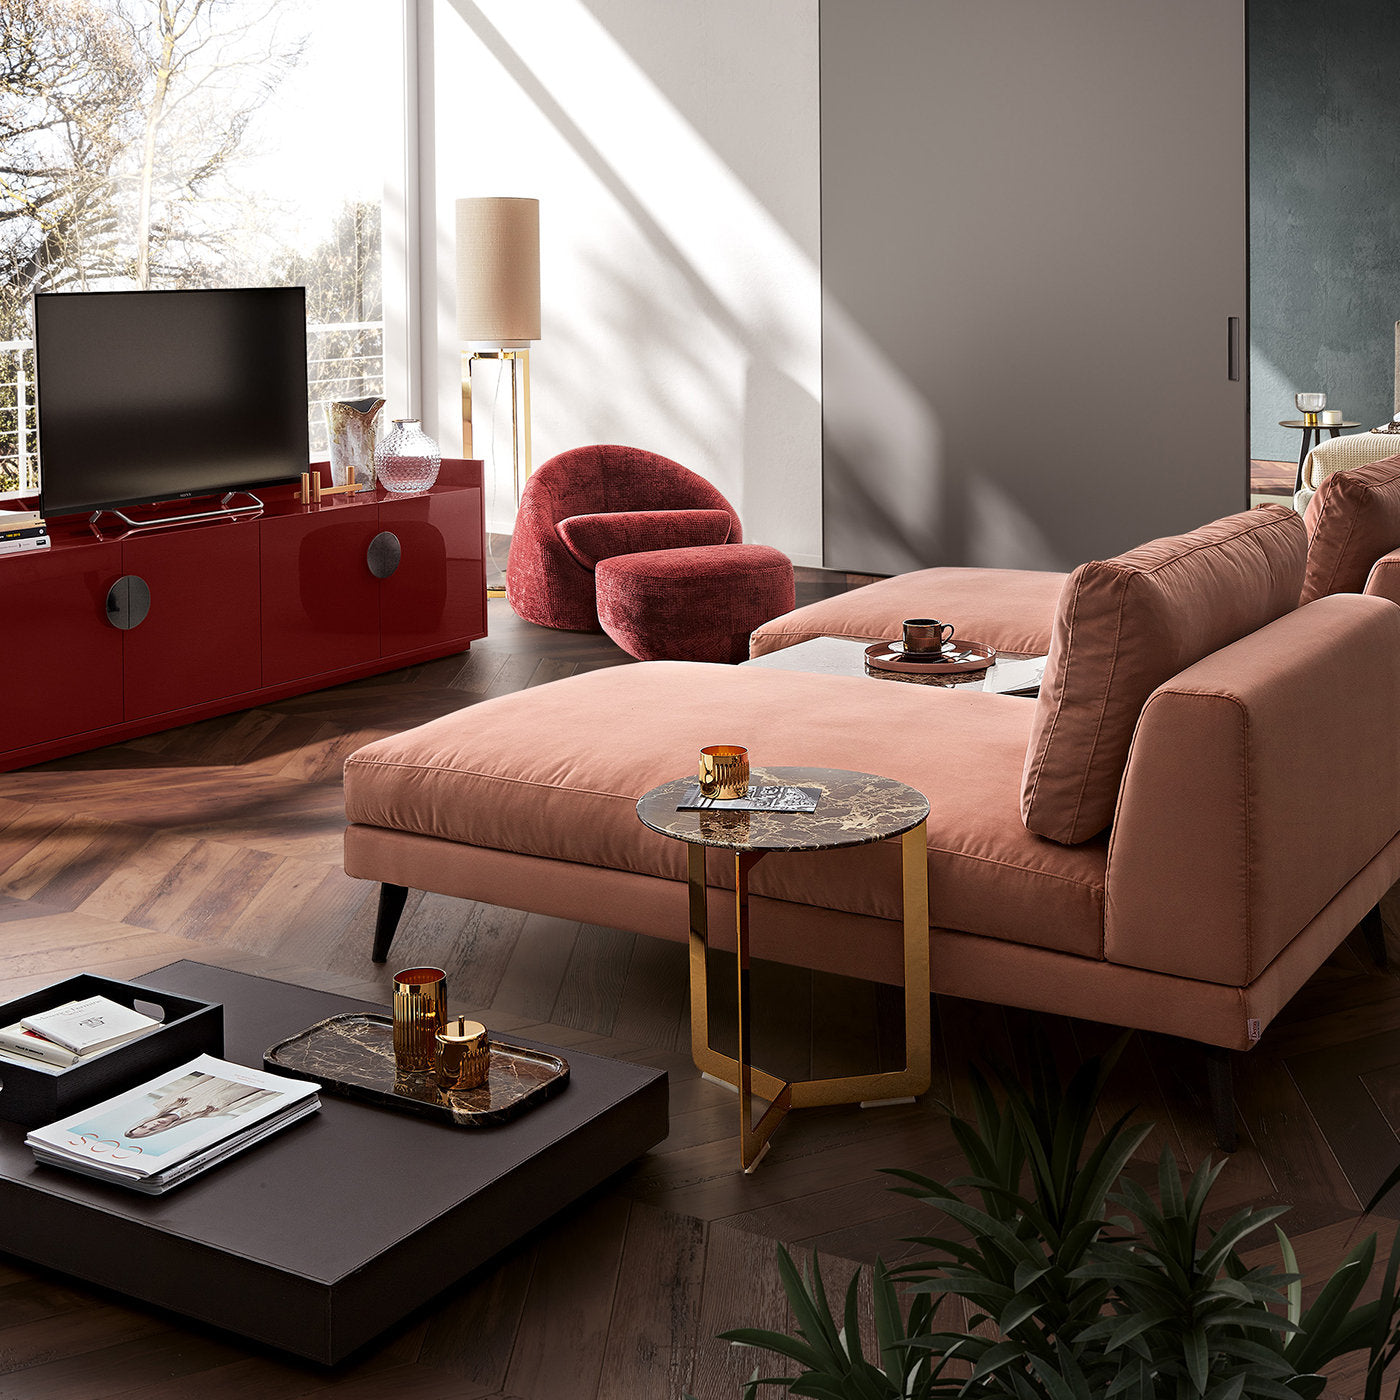 Cuccia Red Armchair and Ottoman by Dema Design - Alternative view 2